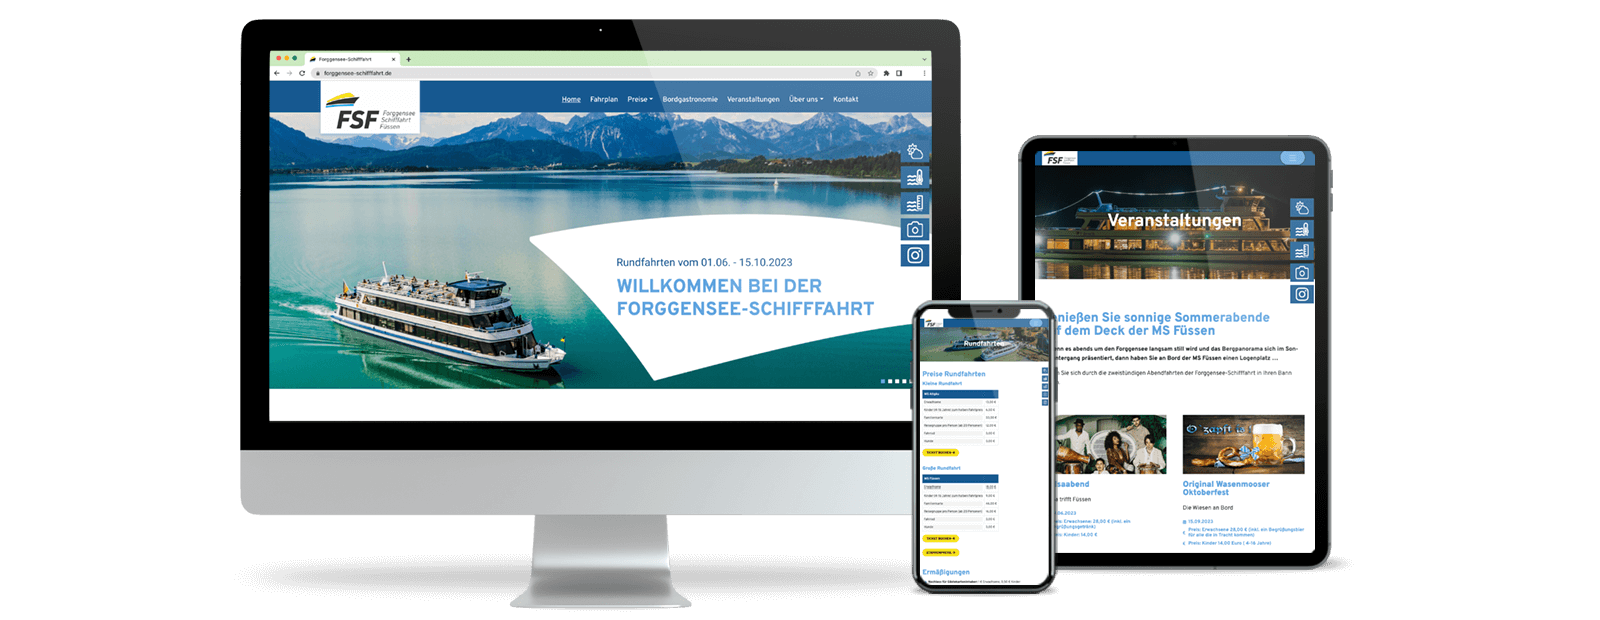 Mockup Website Schifffahrt Forggensee an drei verschiedenen Geräten